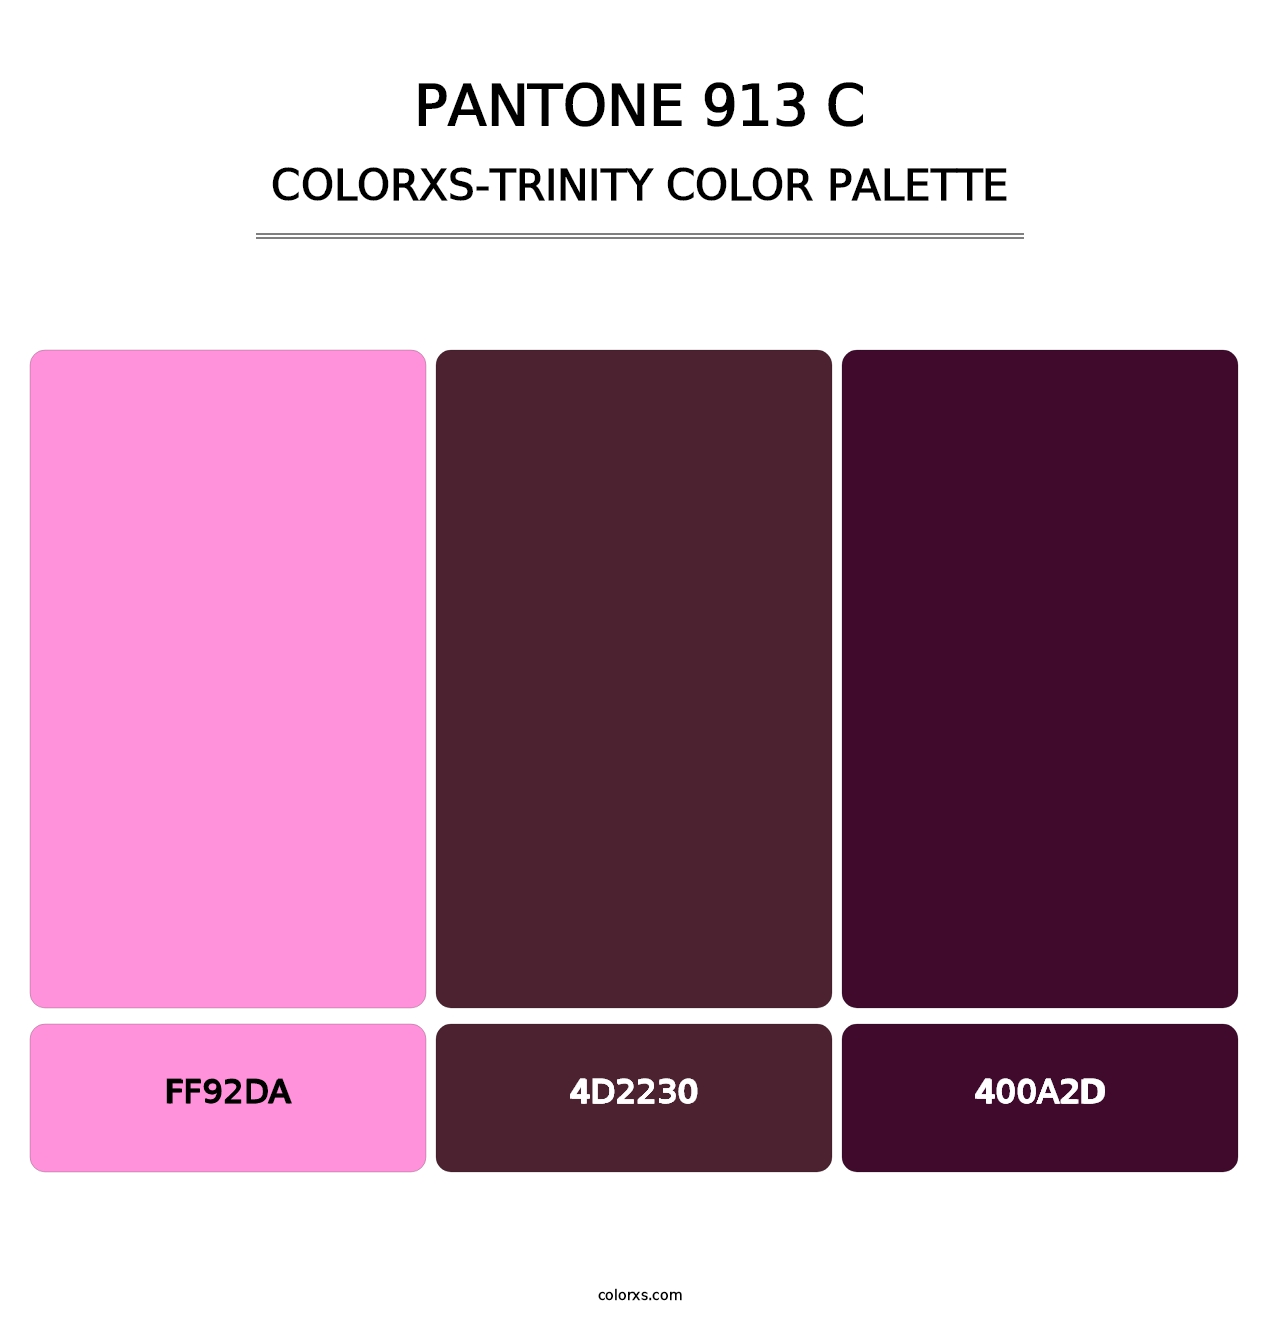 PANTONE 913 C - Colorxs Trinity Palette